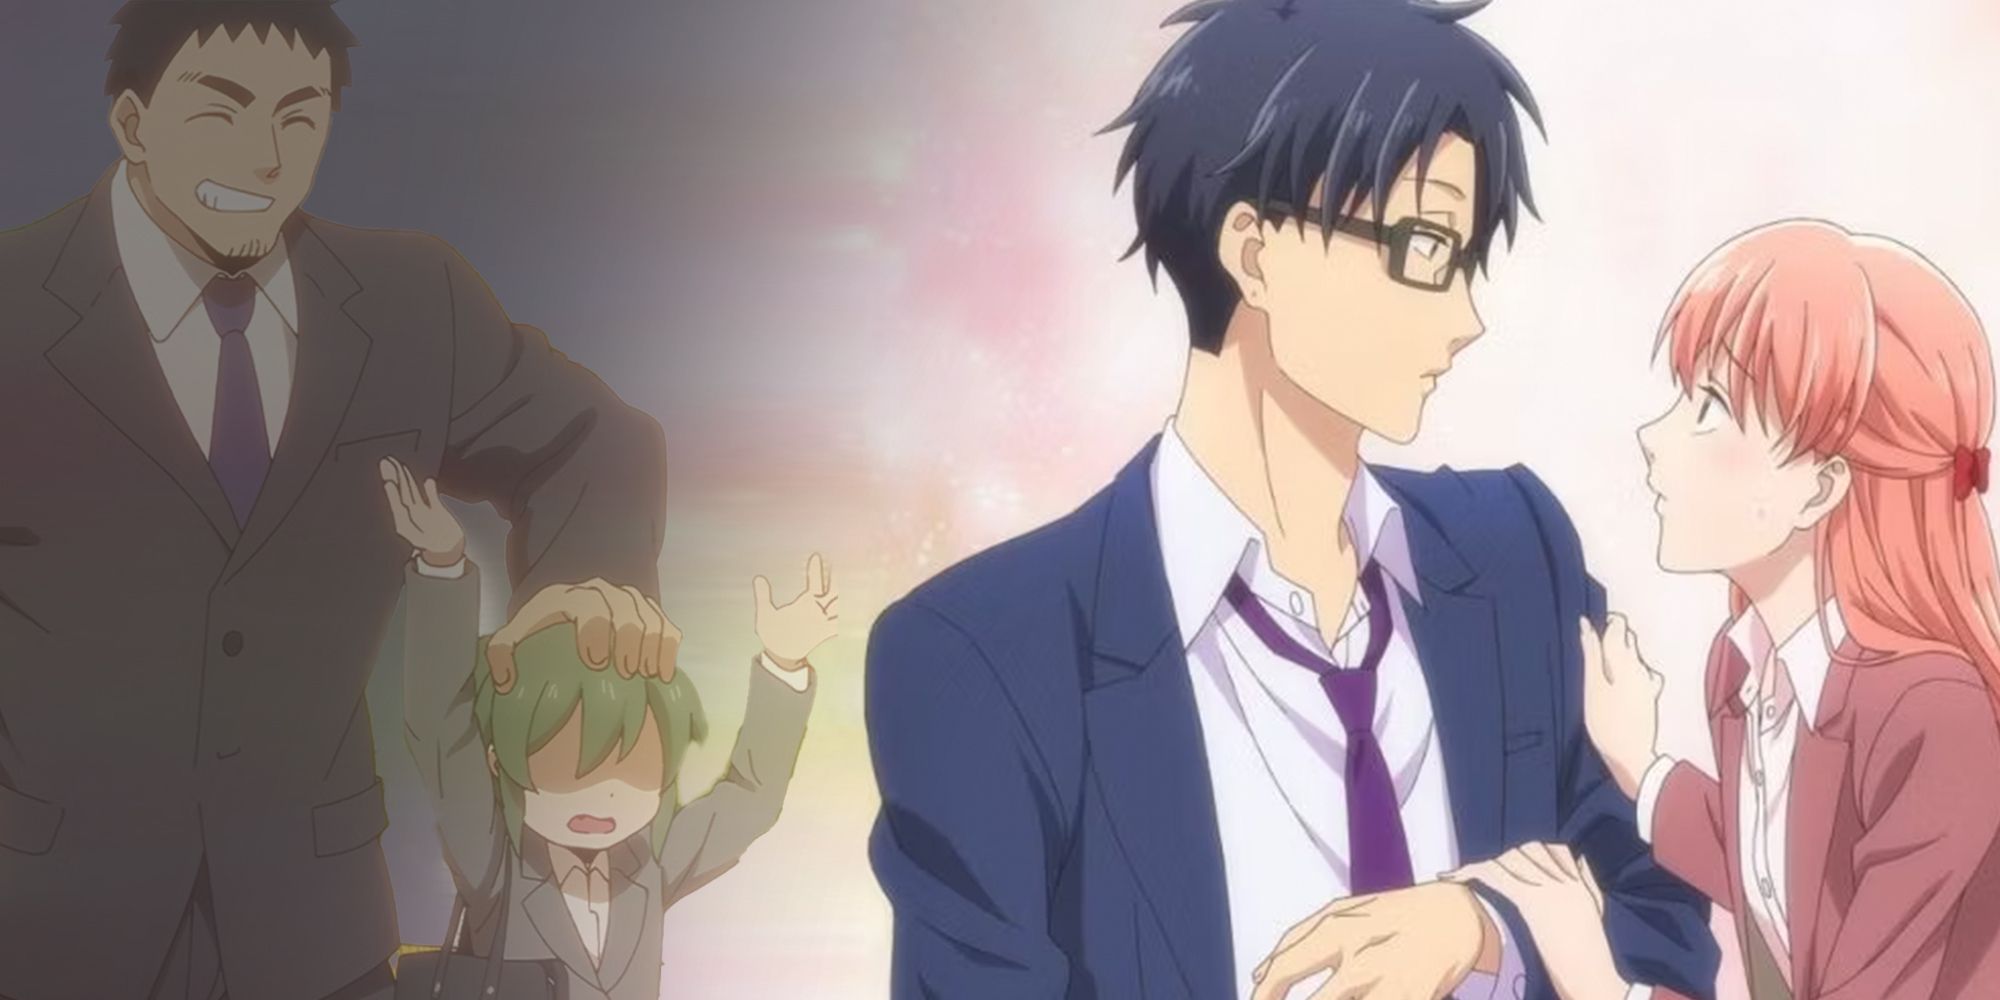 New office romance anime | Anime Amino